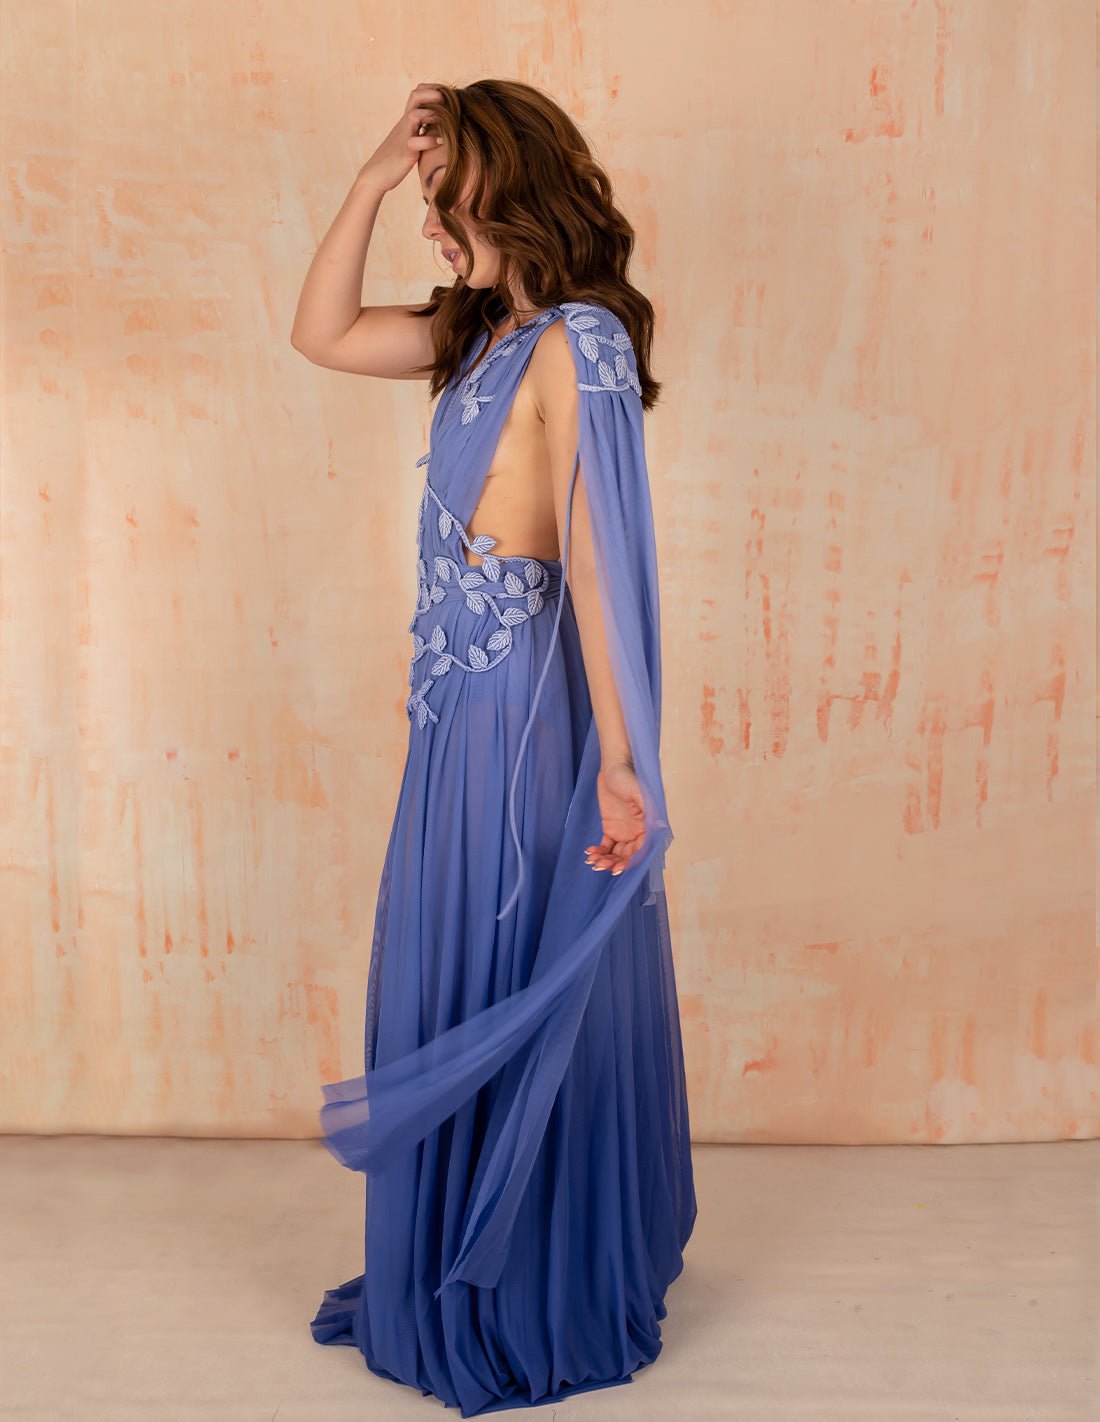 Copernico Dress Sky Blue - Dress - Entreaguas Wearable Art